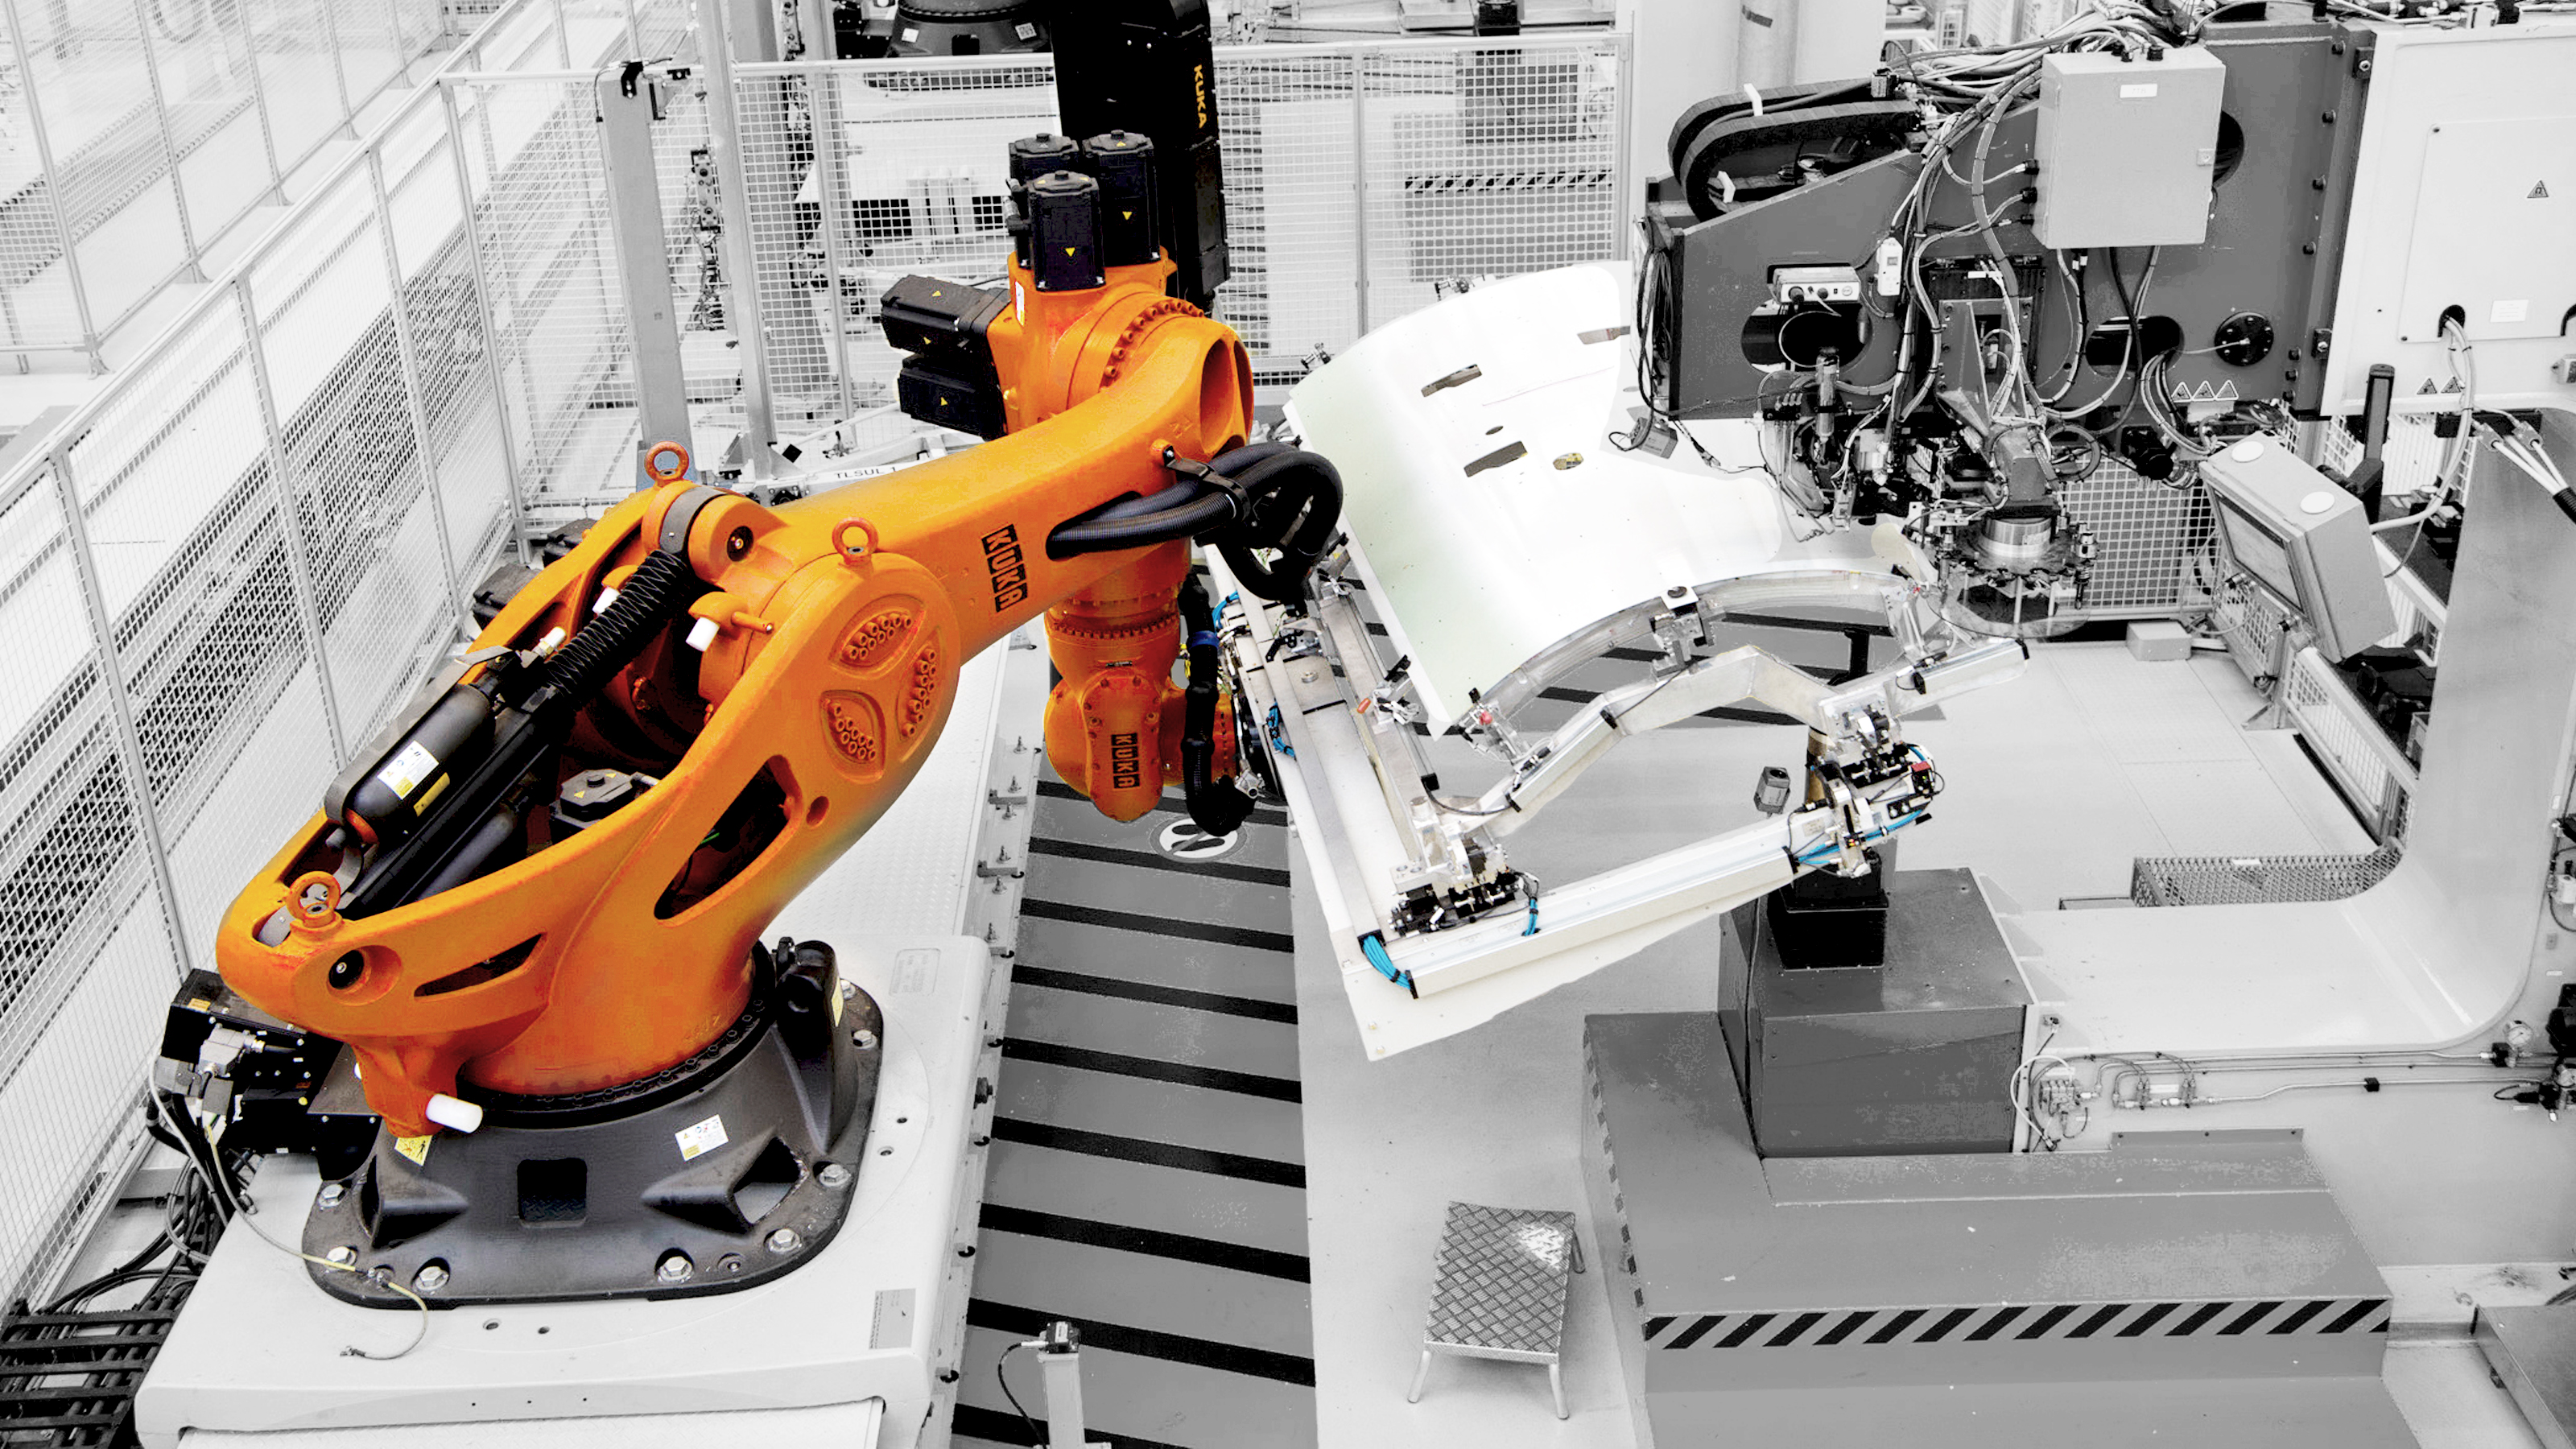 kuka automation equipment & kuka robotics